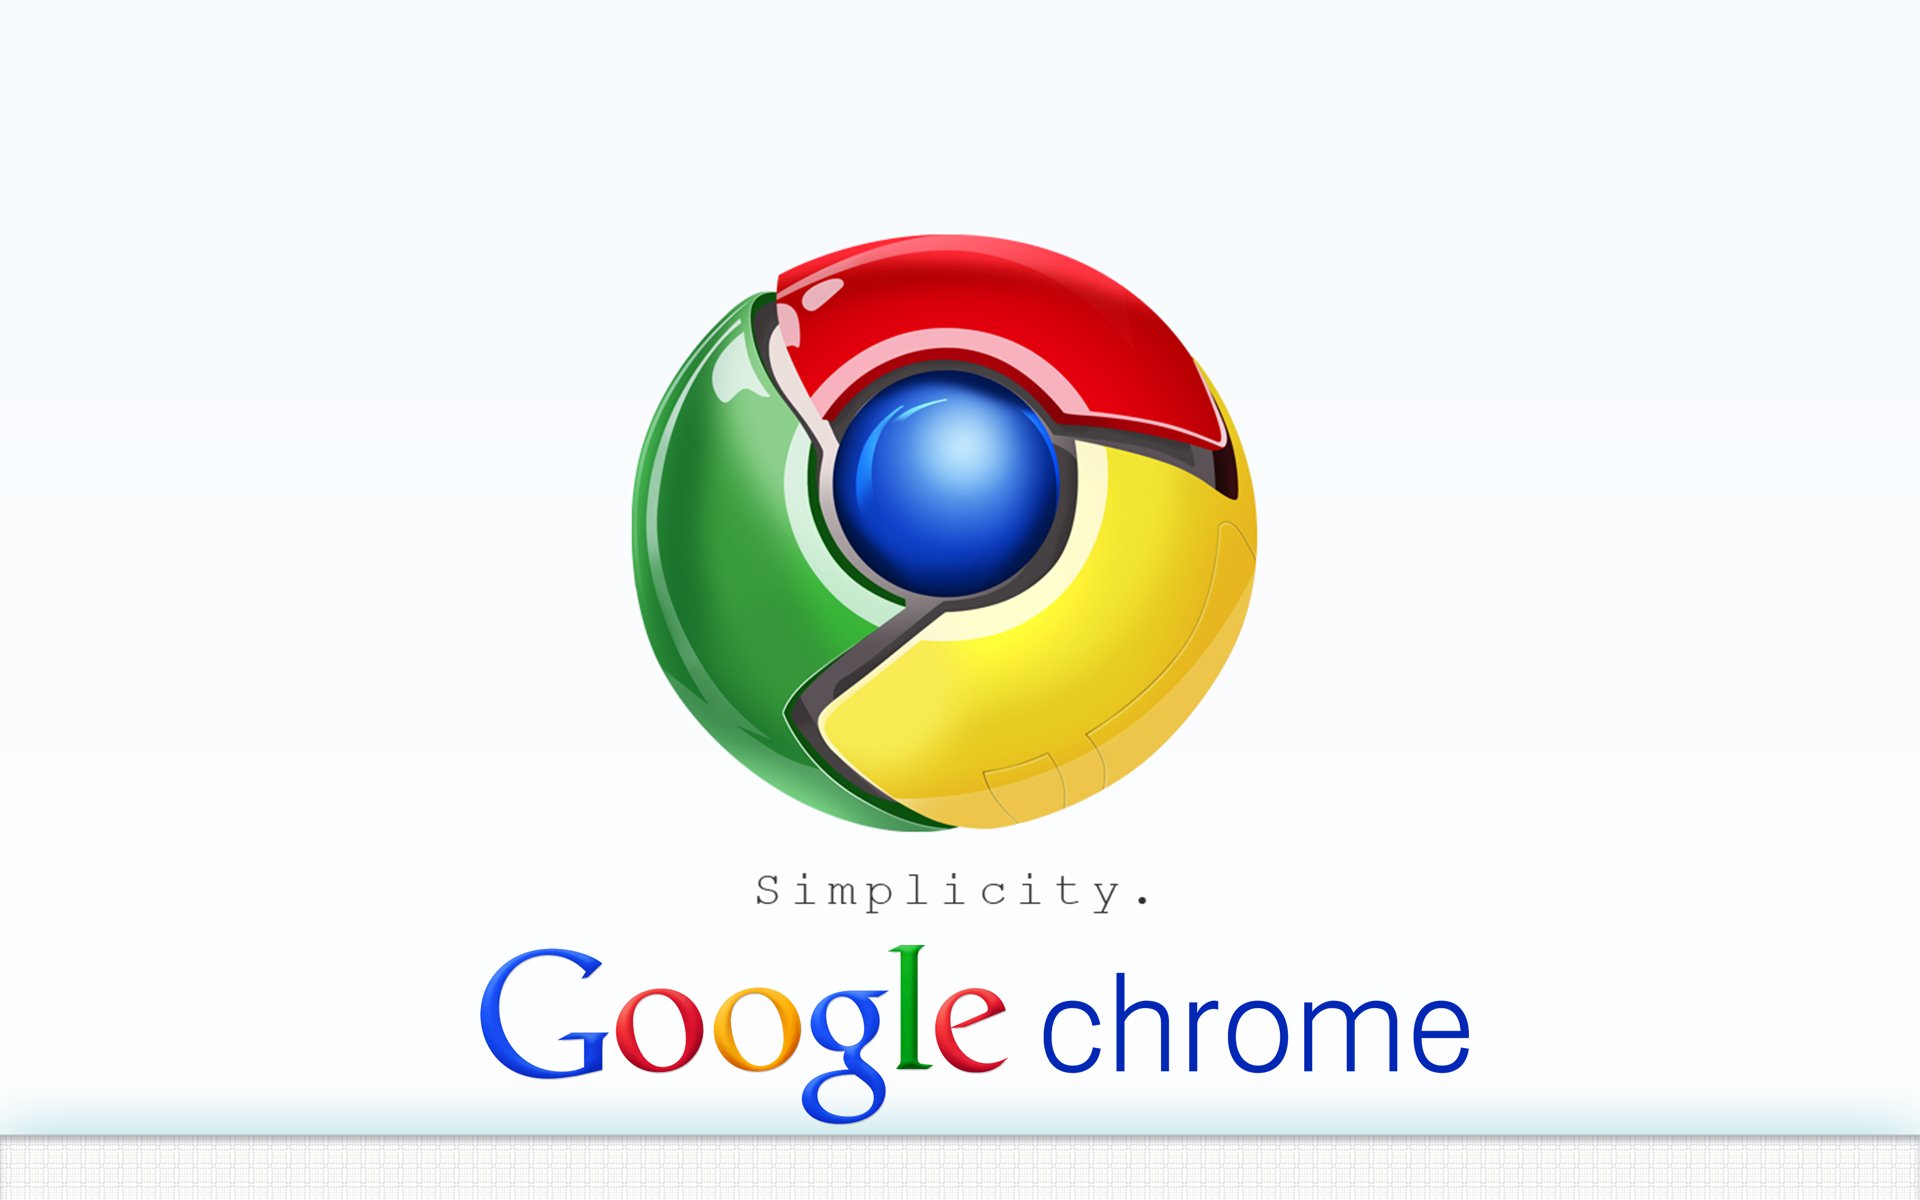 download latest google chrome for windows 10 64 bit